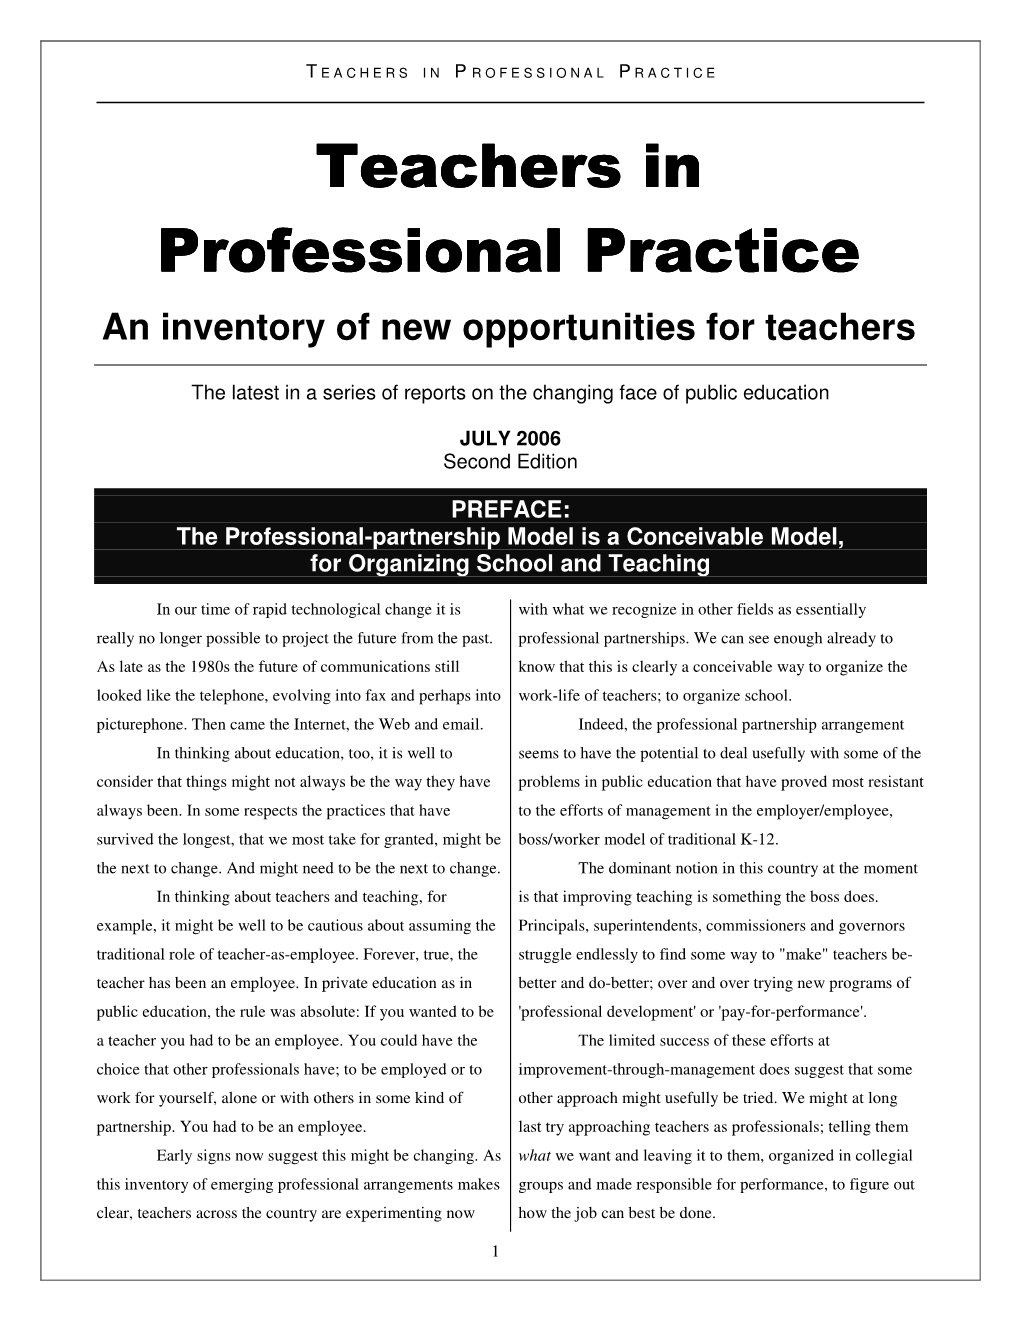 Teachers in Teachers in Professional Practice Professional Practice